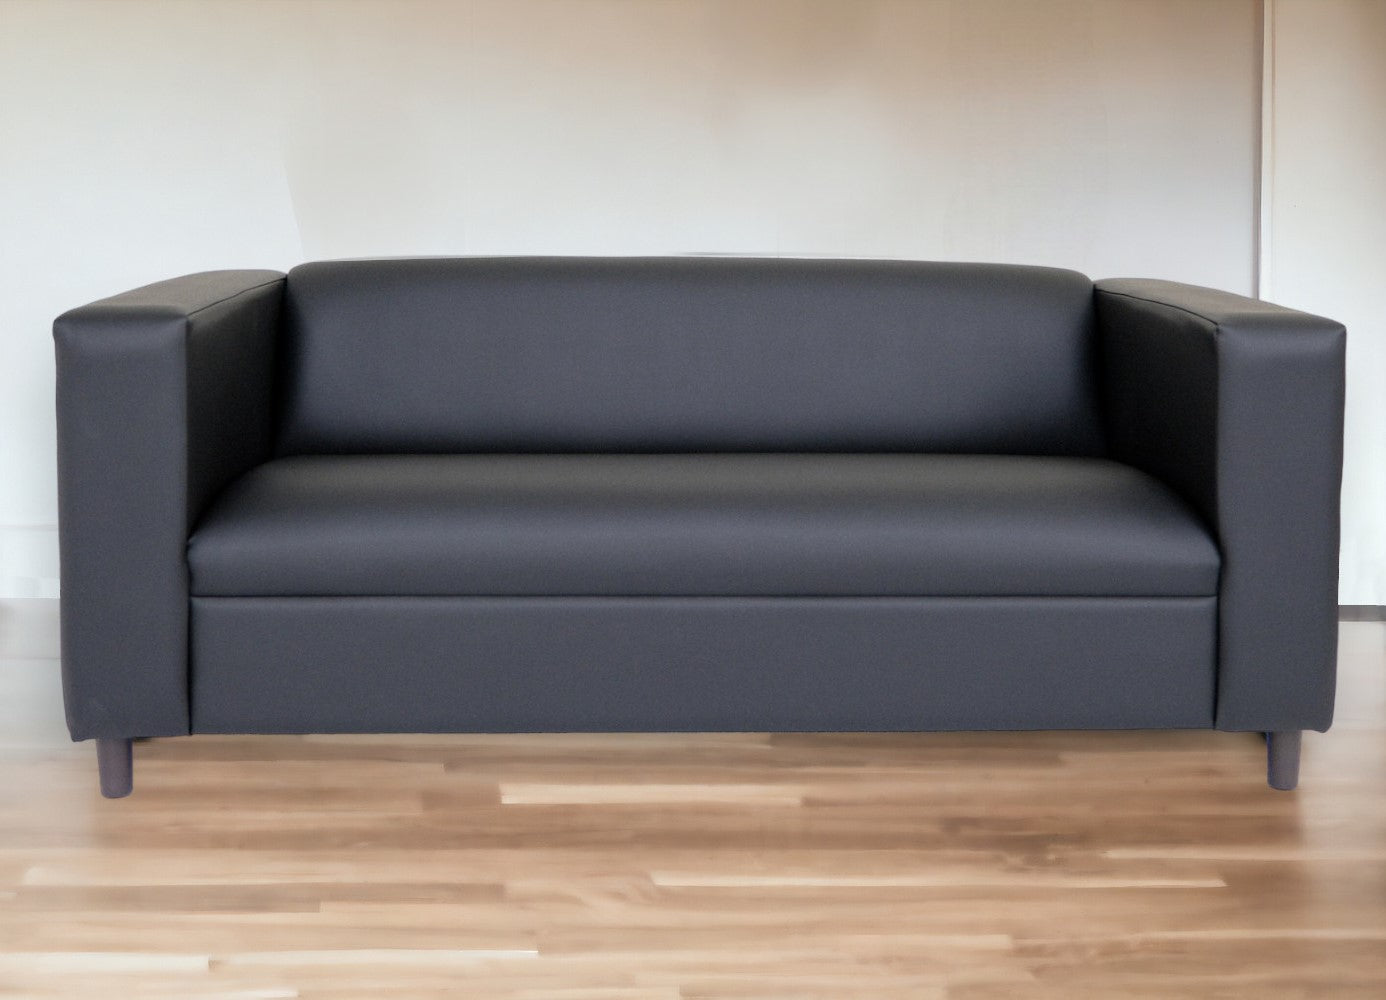 80" Black Polyester Sofa